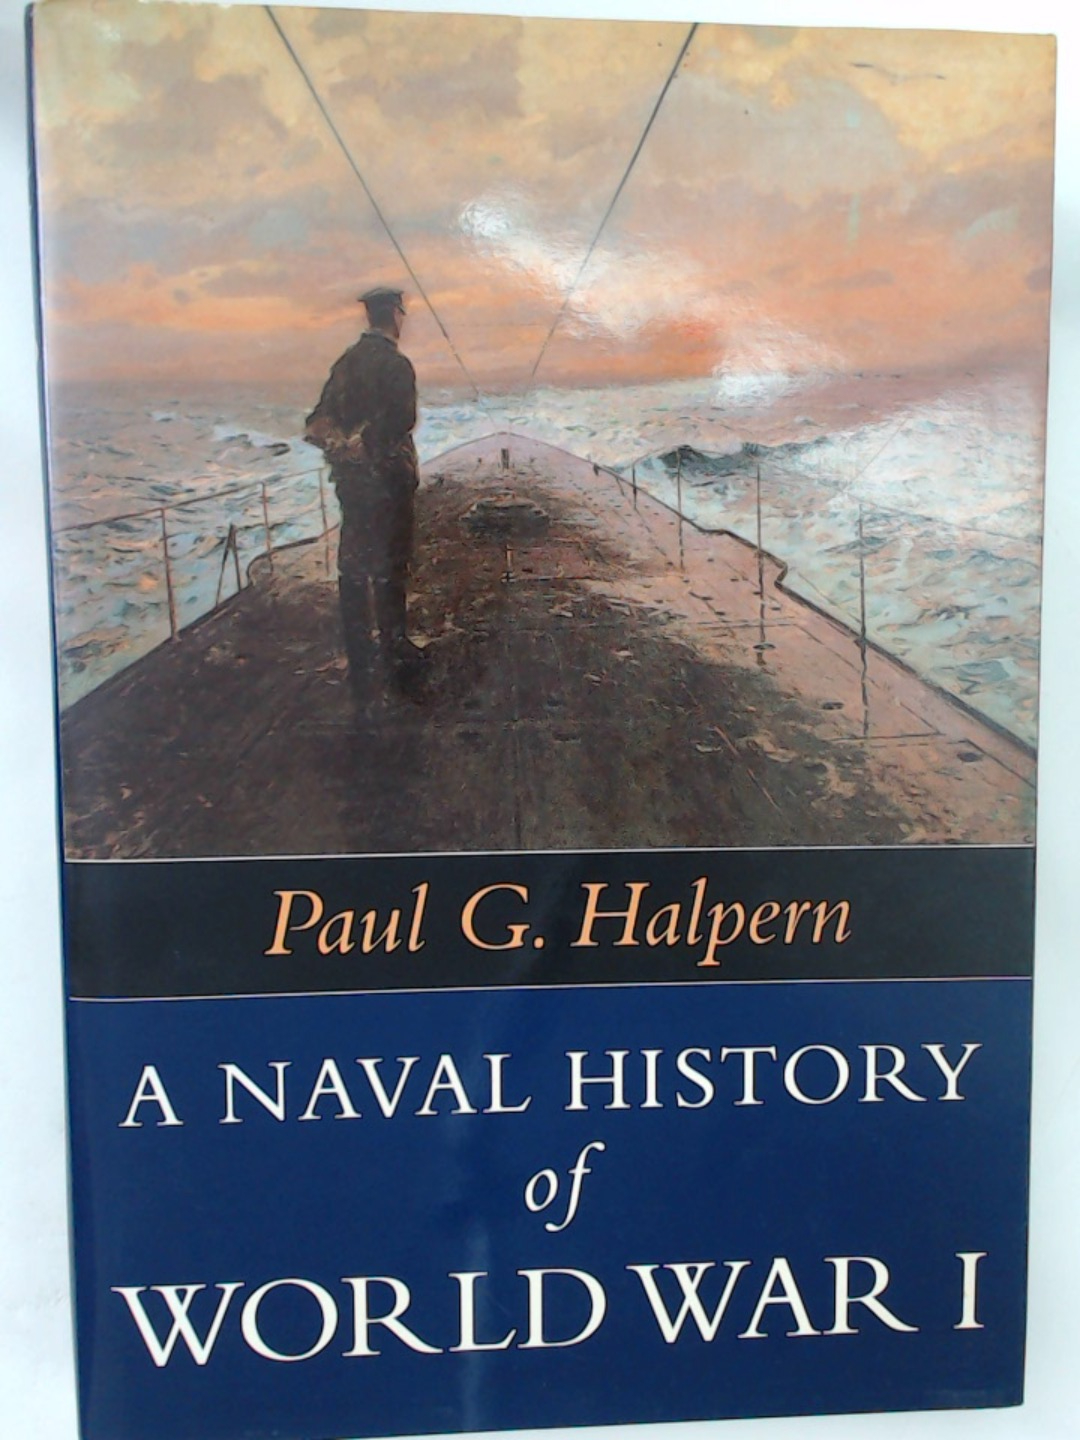 A Naval History of World War I.